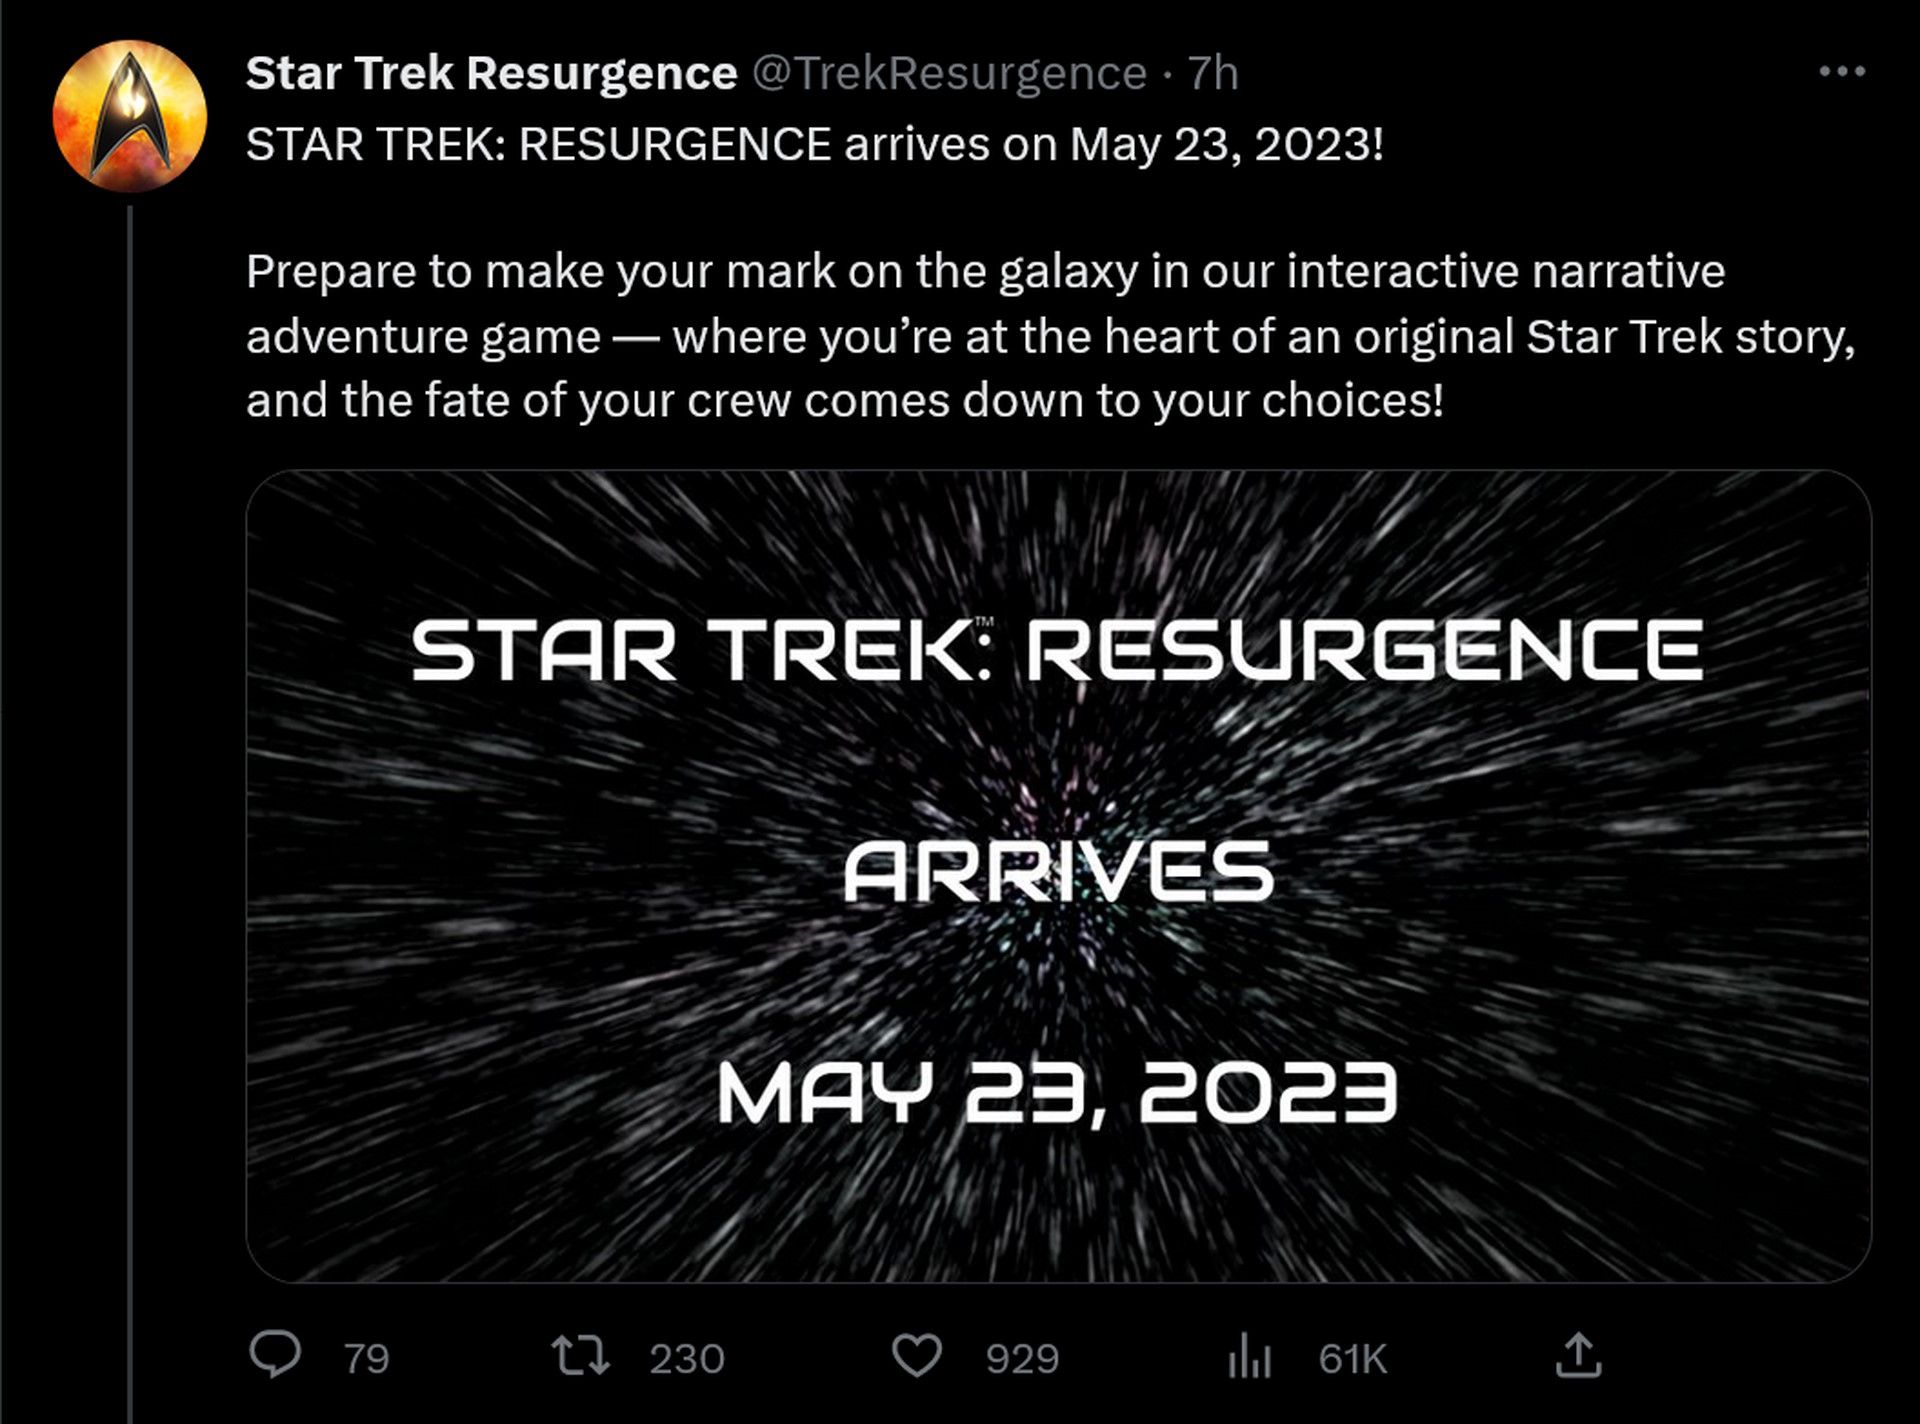 Star Trek: Resurgence launch date tweet